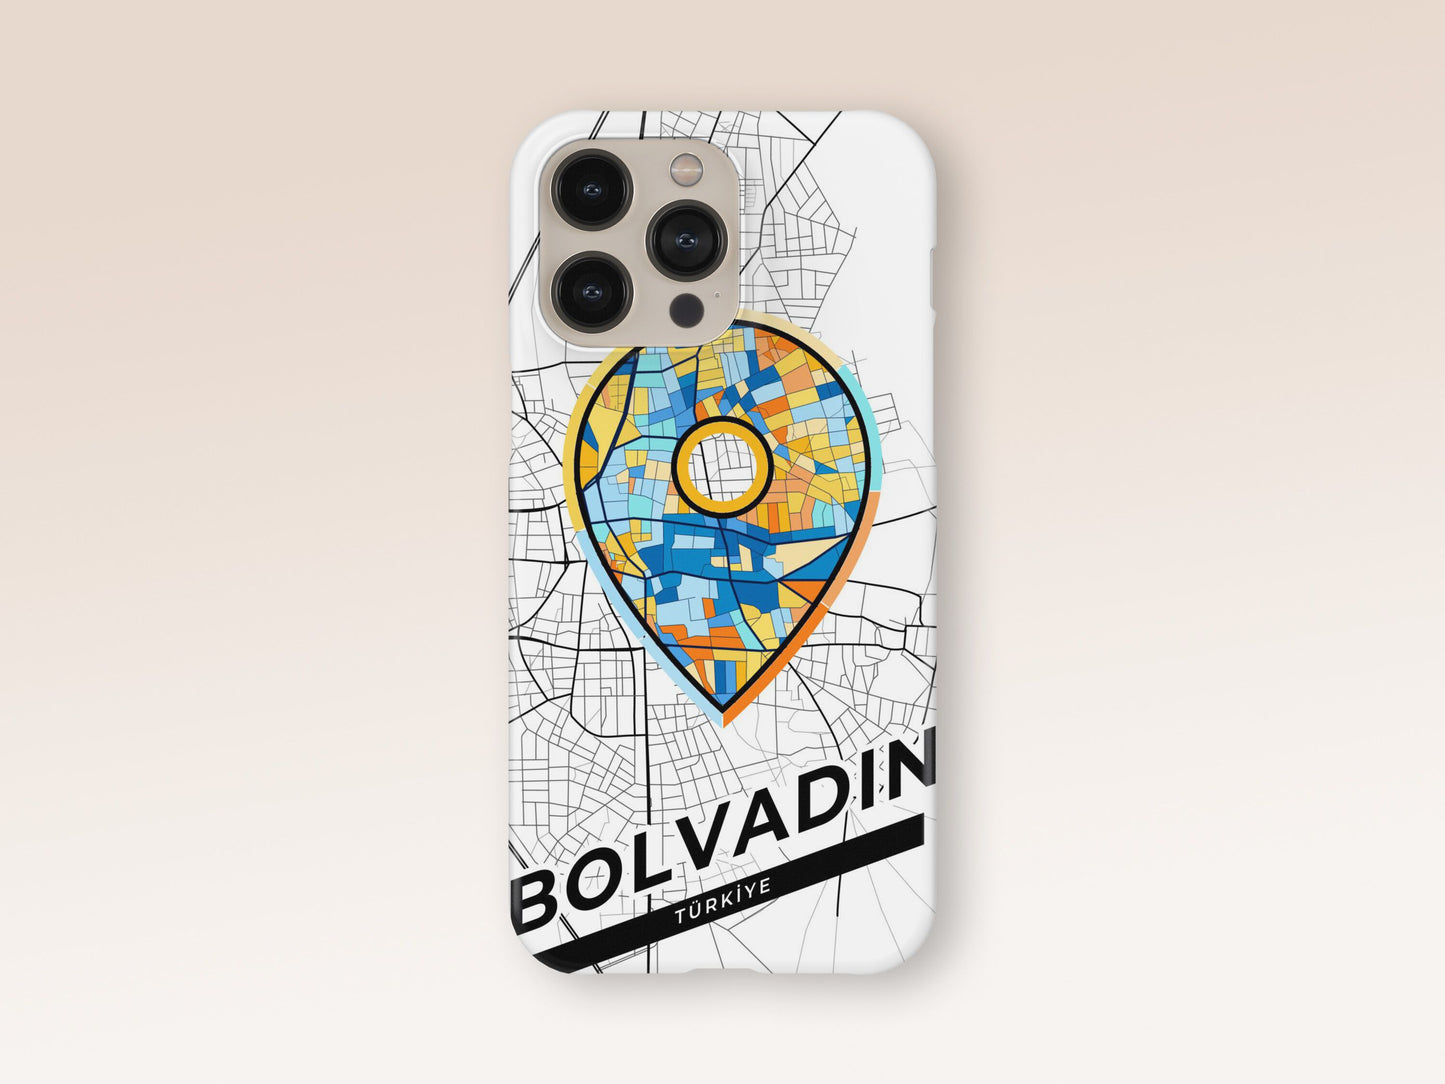 Bolvadin Turkey slim phone case with colorful icon. Birthday, wedding or housewarming gift. Couple match cases. 1